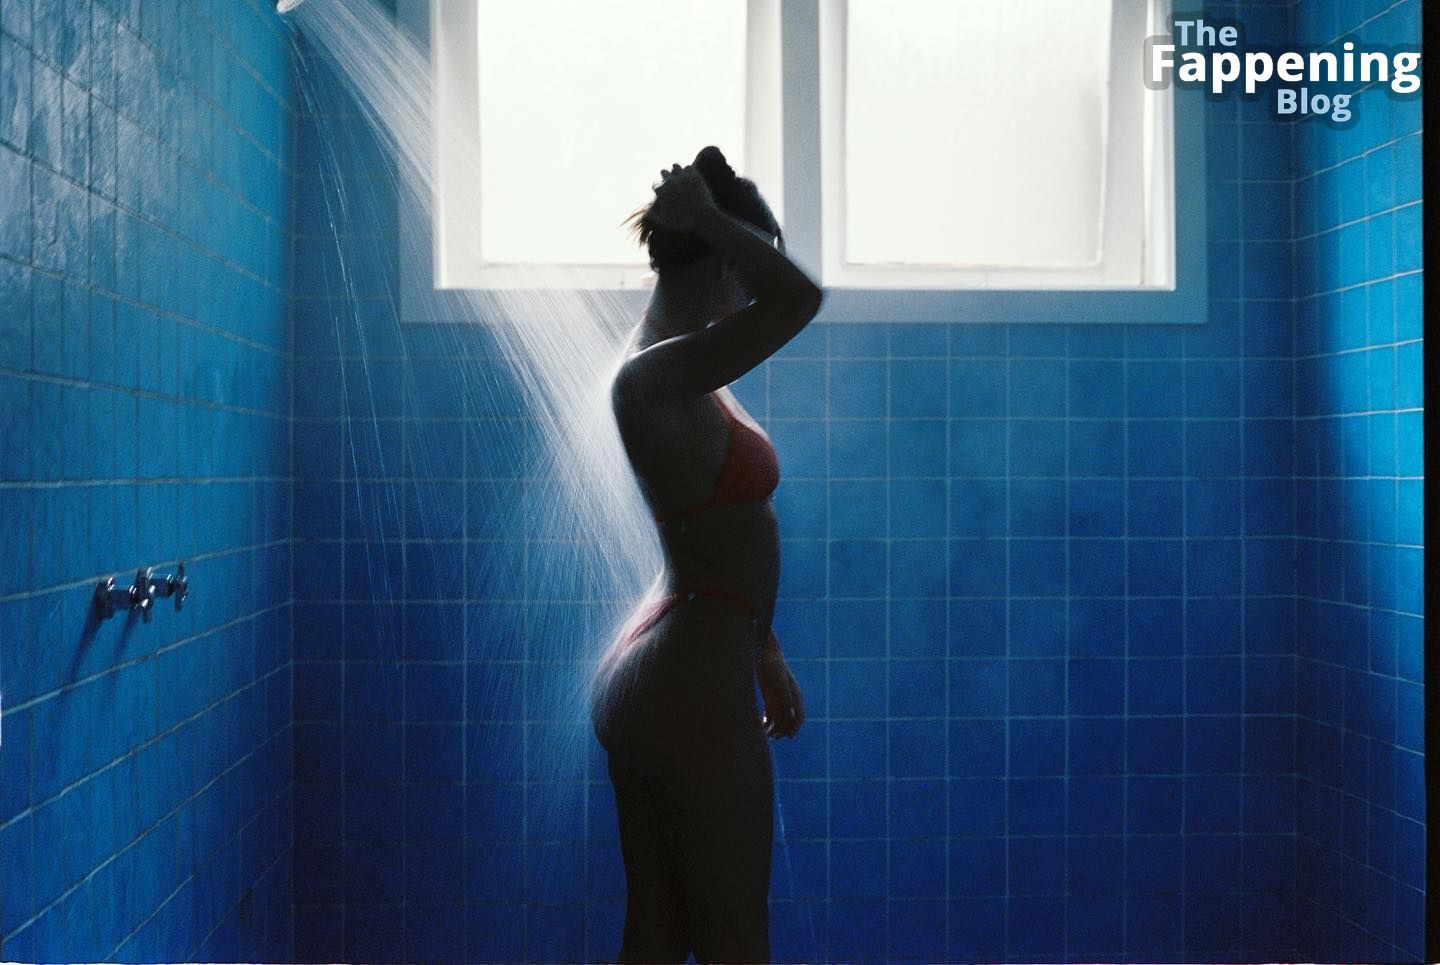 Emily Ratajkowski Looks Sexy in the Shower (10 Photos + Video)